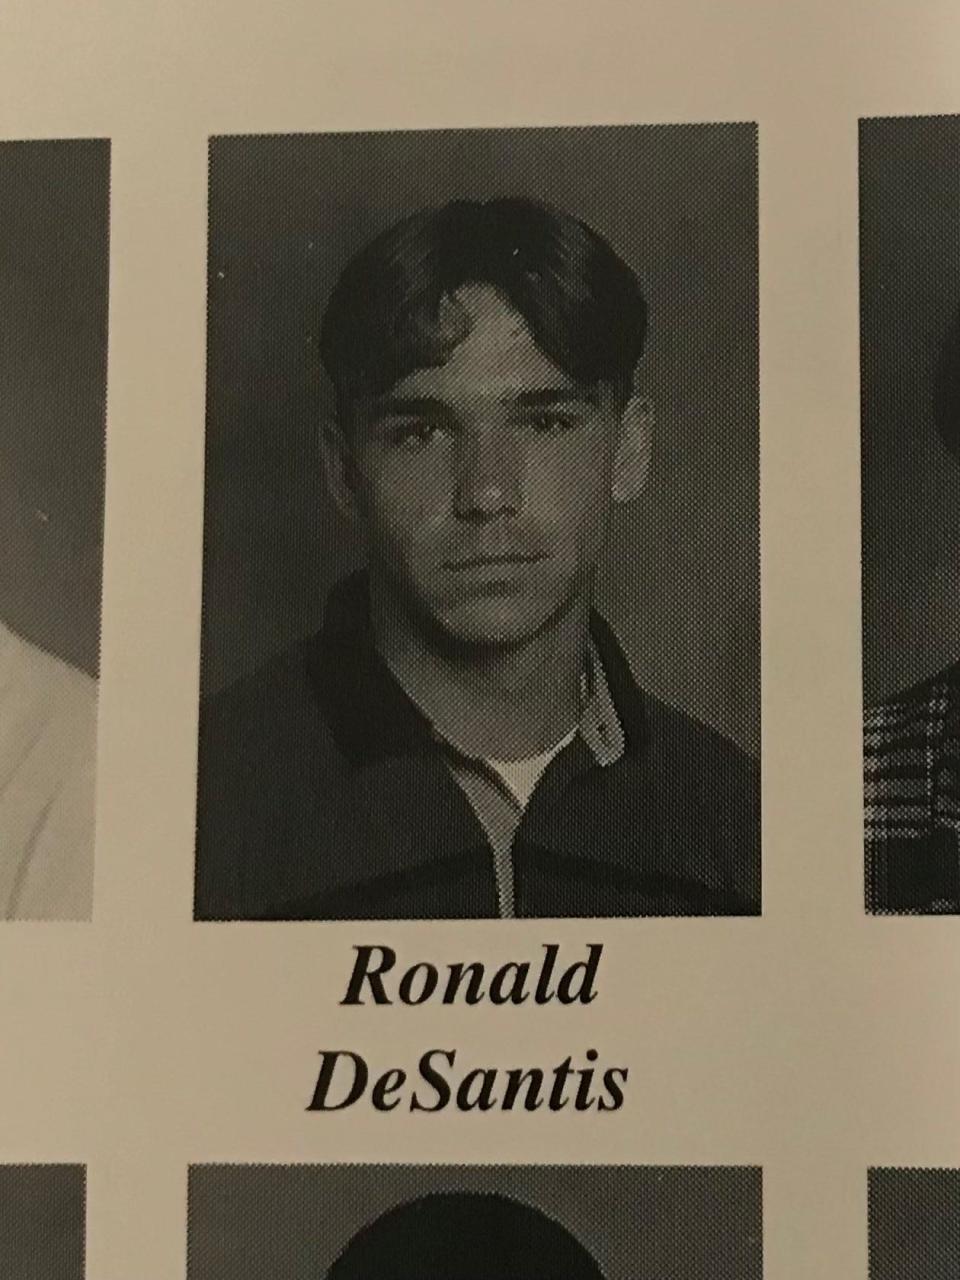 Ron DeSantis 11th grade yearbook photo from Dunedin High School